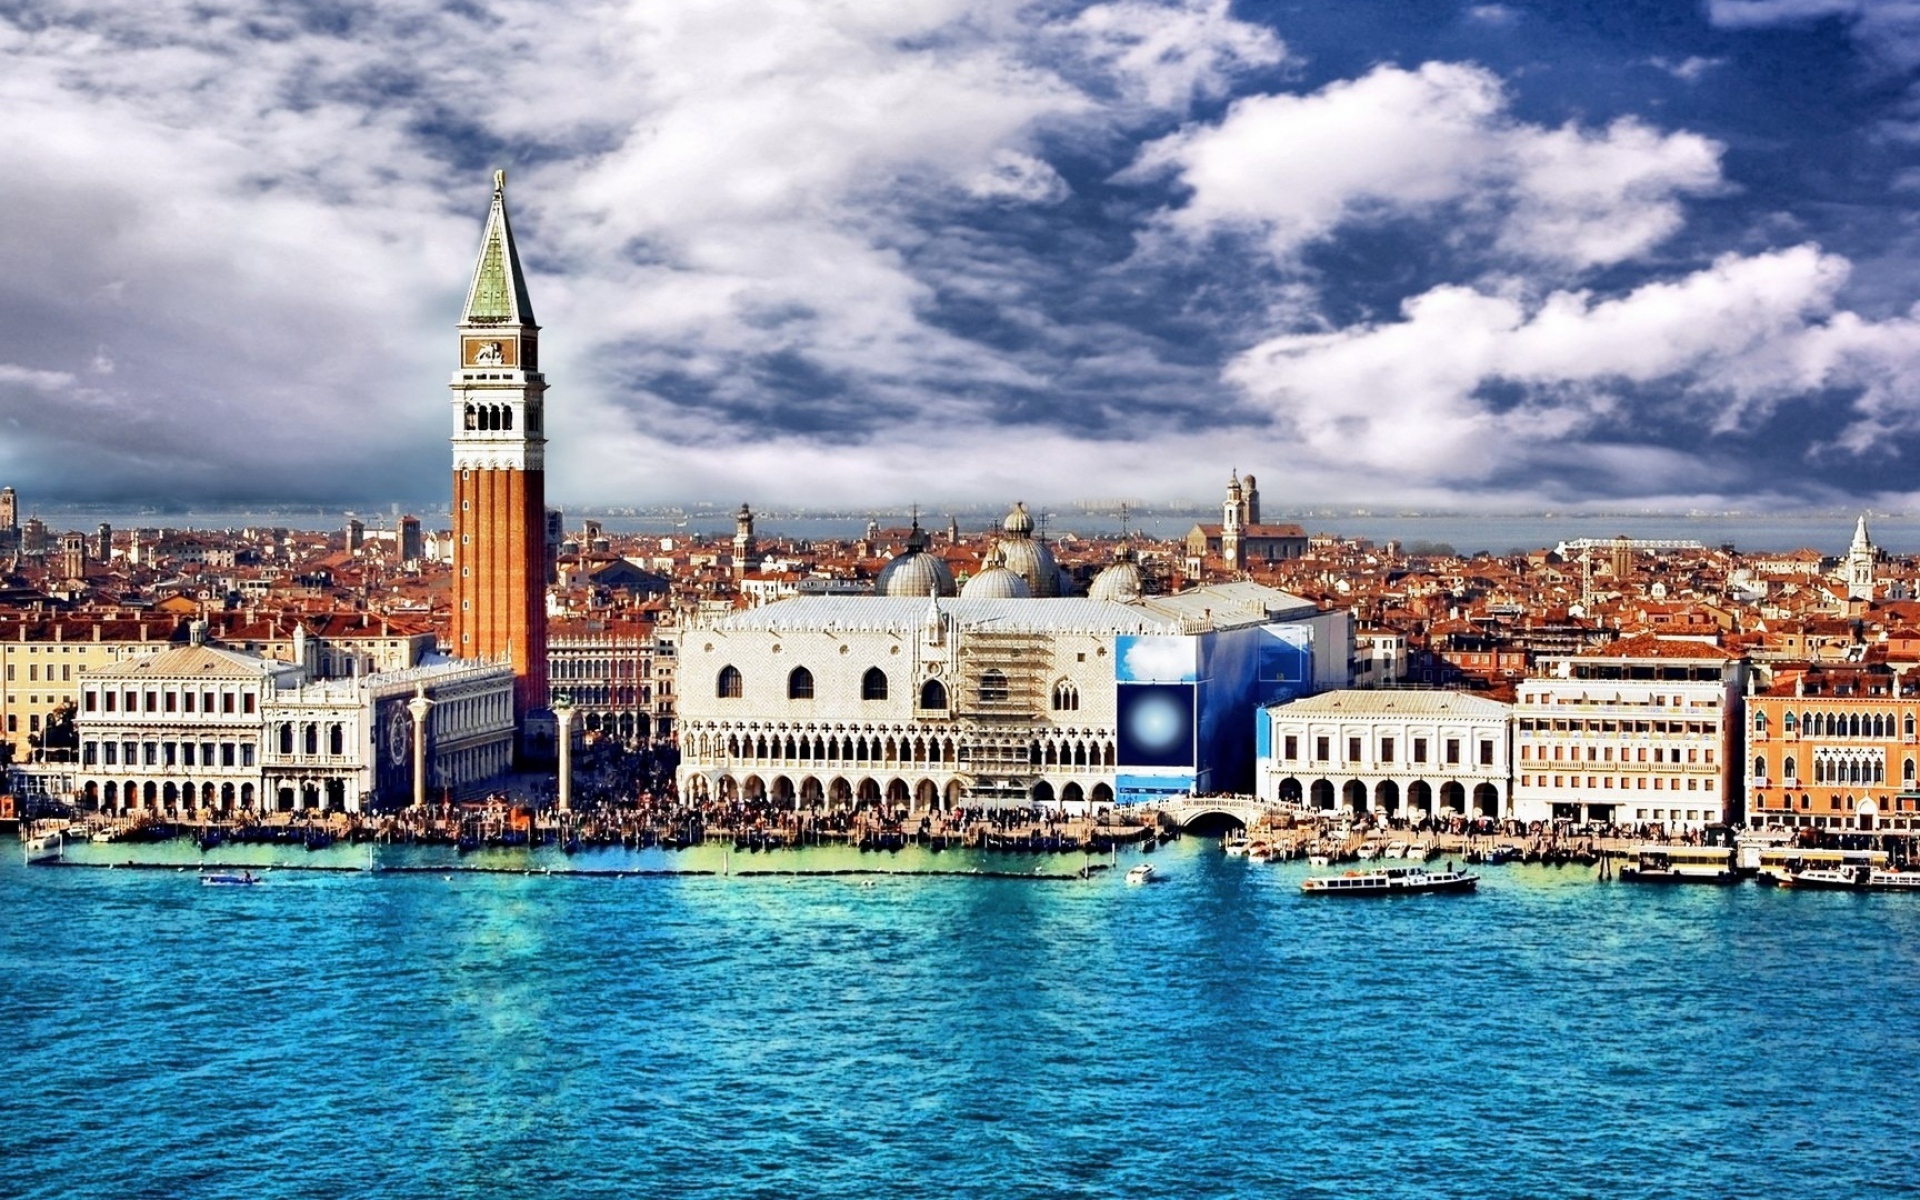 Картинки Венеция, Италия, здания, река, вид сверху, яркие цвета фото и обои на рабочий стол